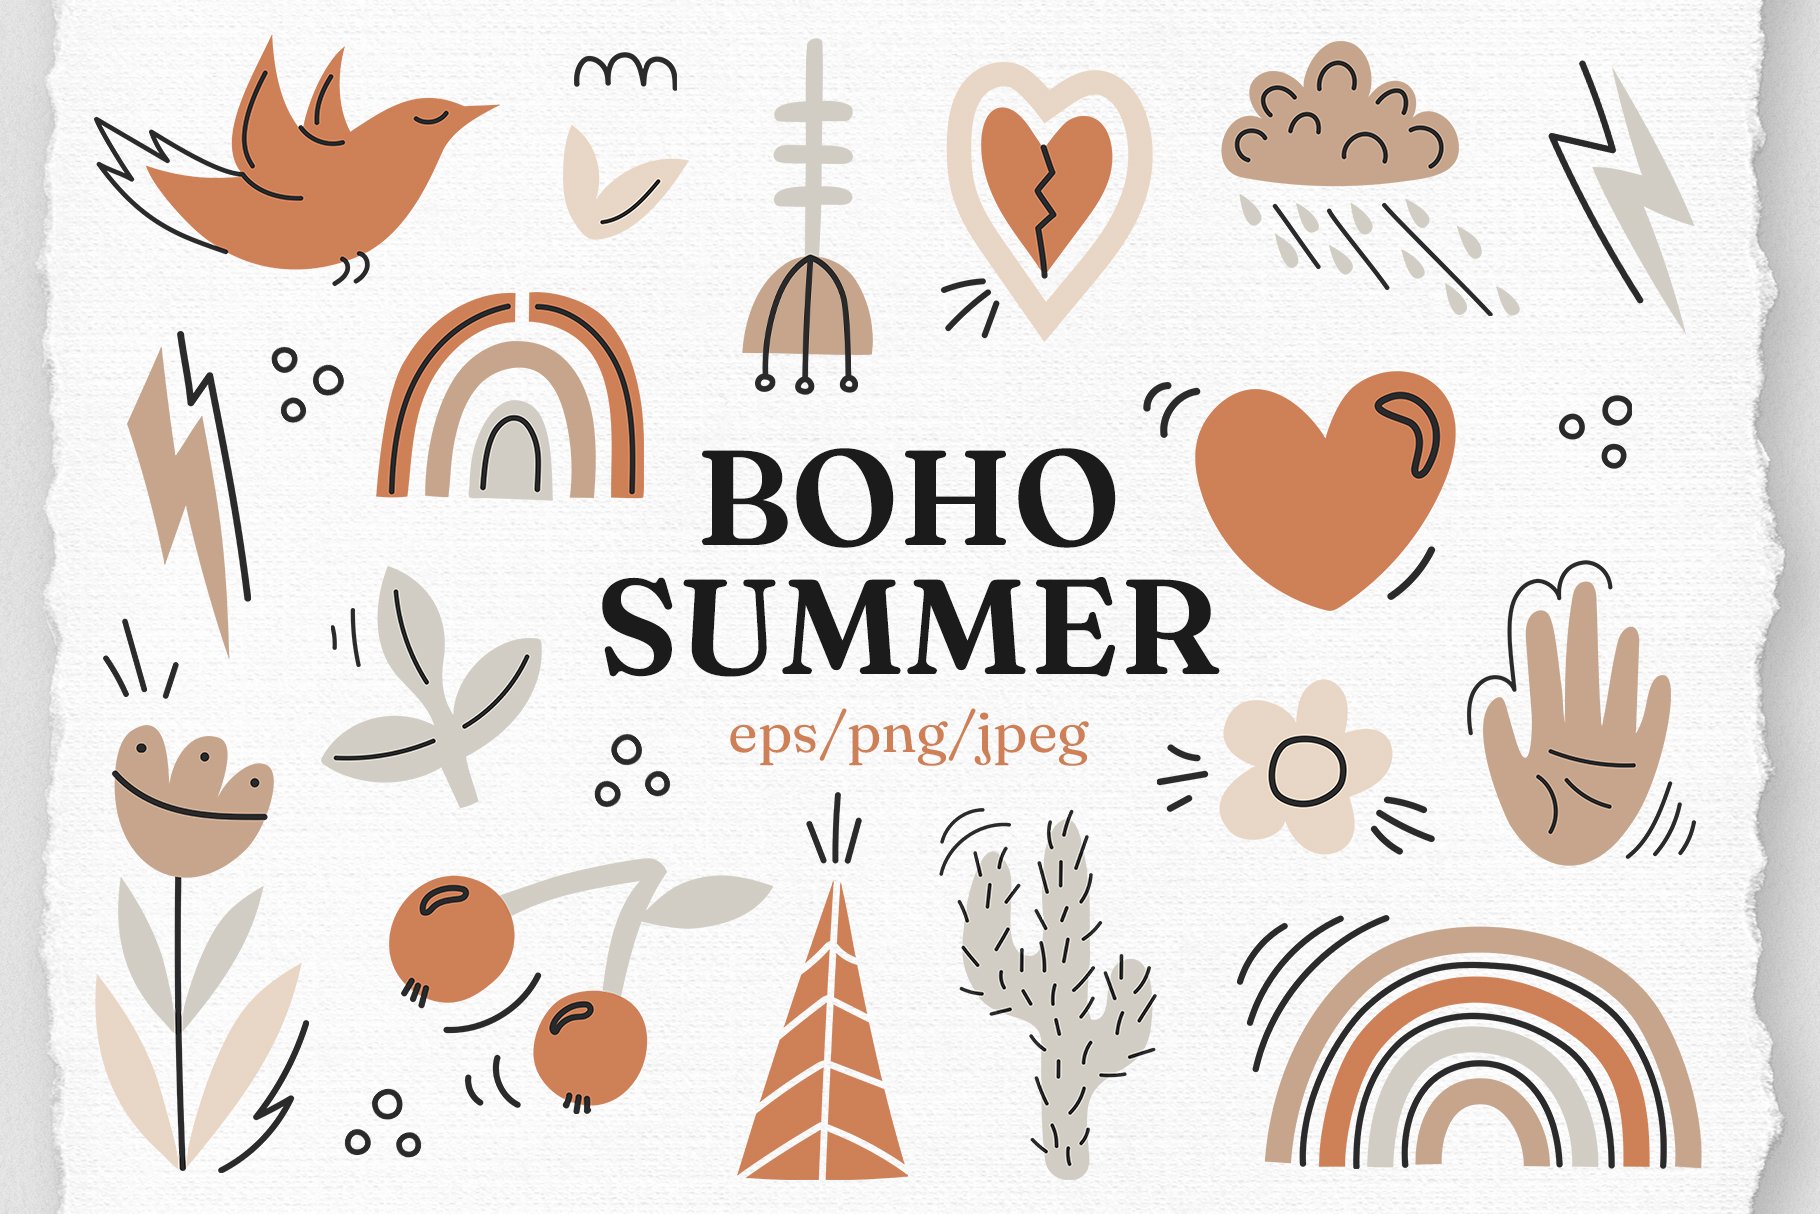 Boho summer cover image.